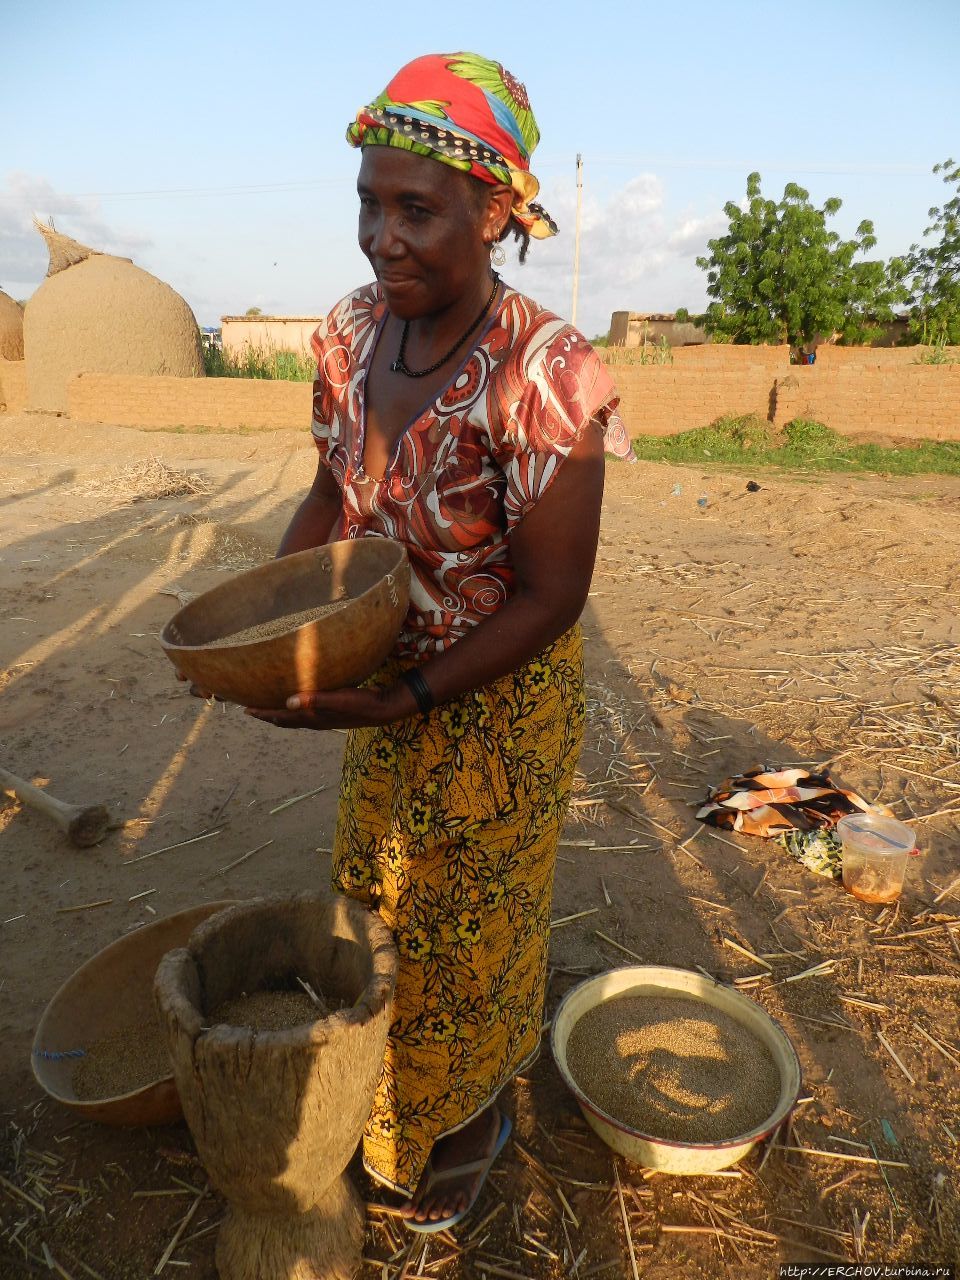 Нигер. Ч — 6. Из Ниамея в Тахуа. Народы Сонгай и Джерма Департамент Доссо, Нигер